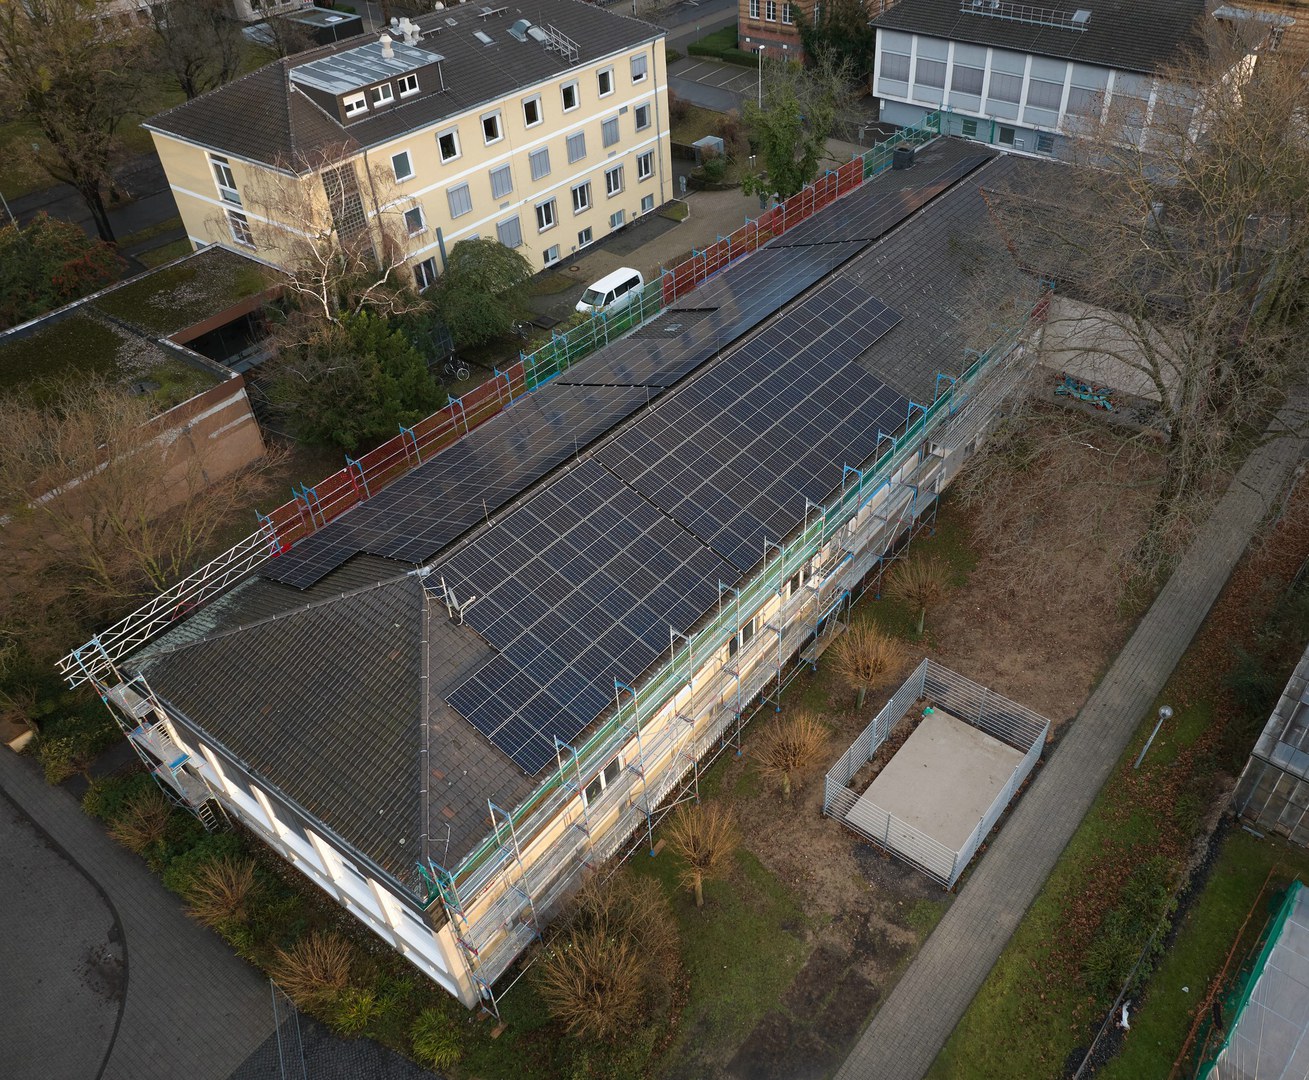 The new solar plant in Poppelsdorf